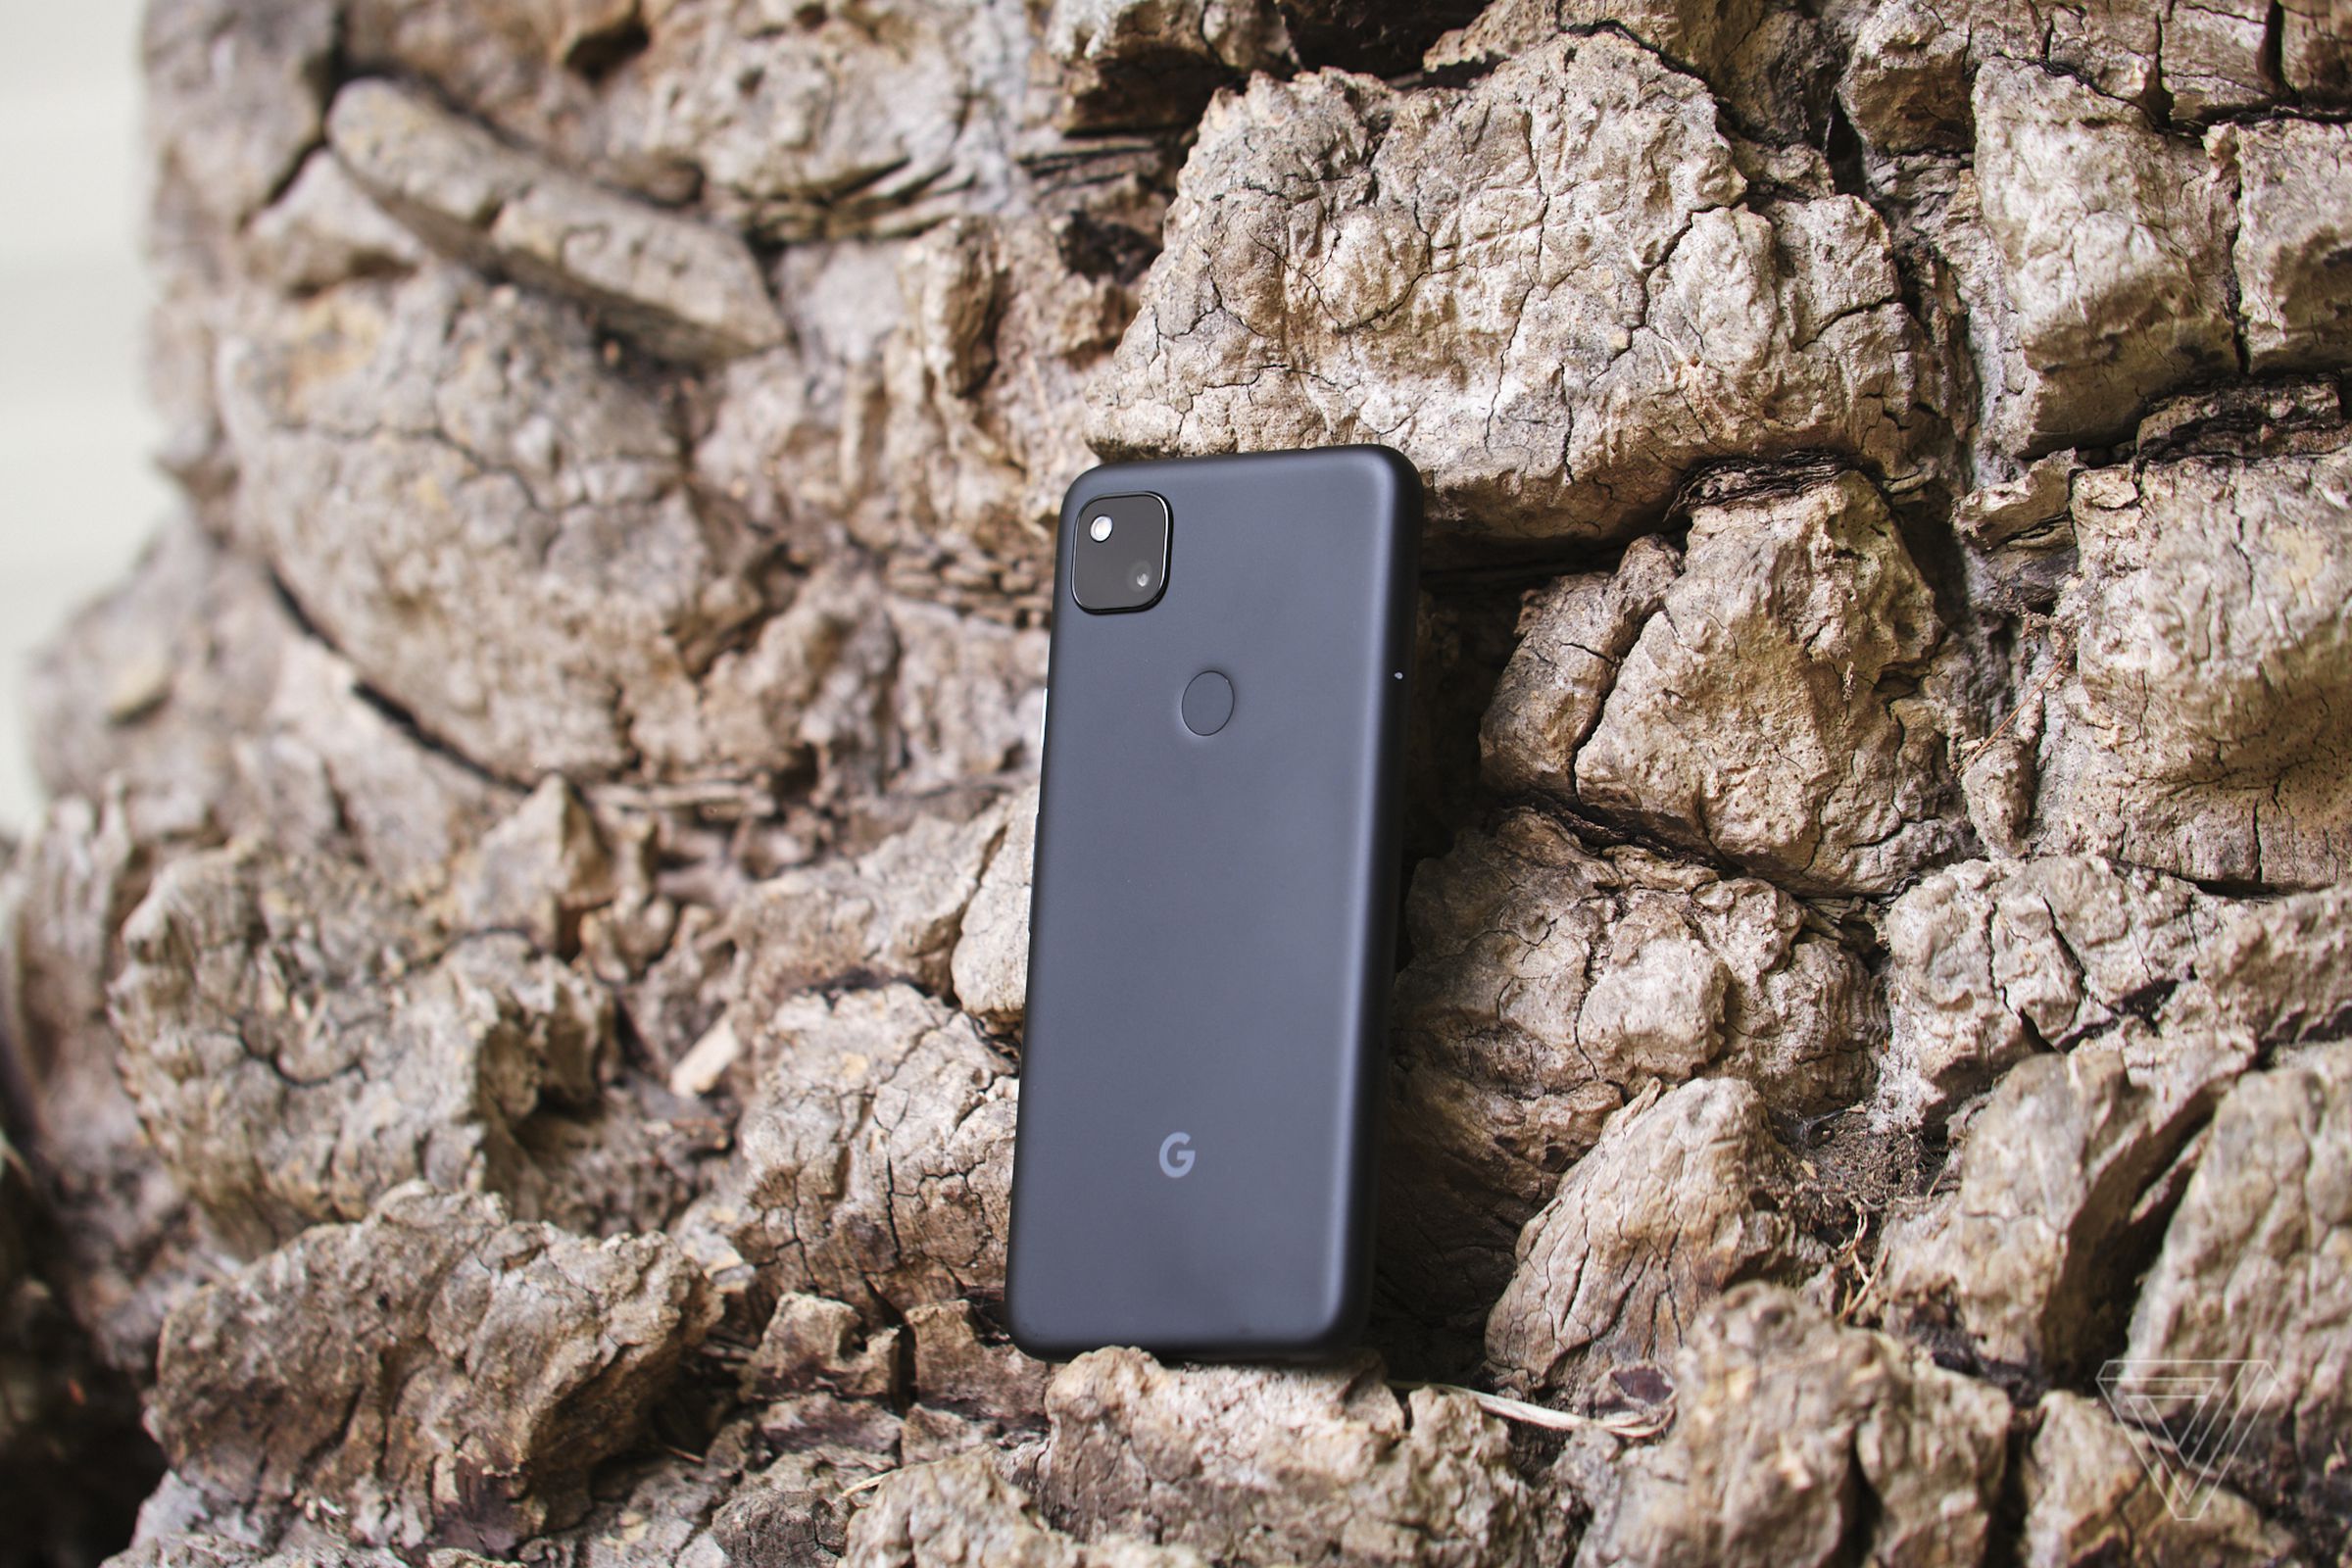 The Google Pixel 4A has a rear-mounted fingerprint sensor.